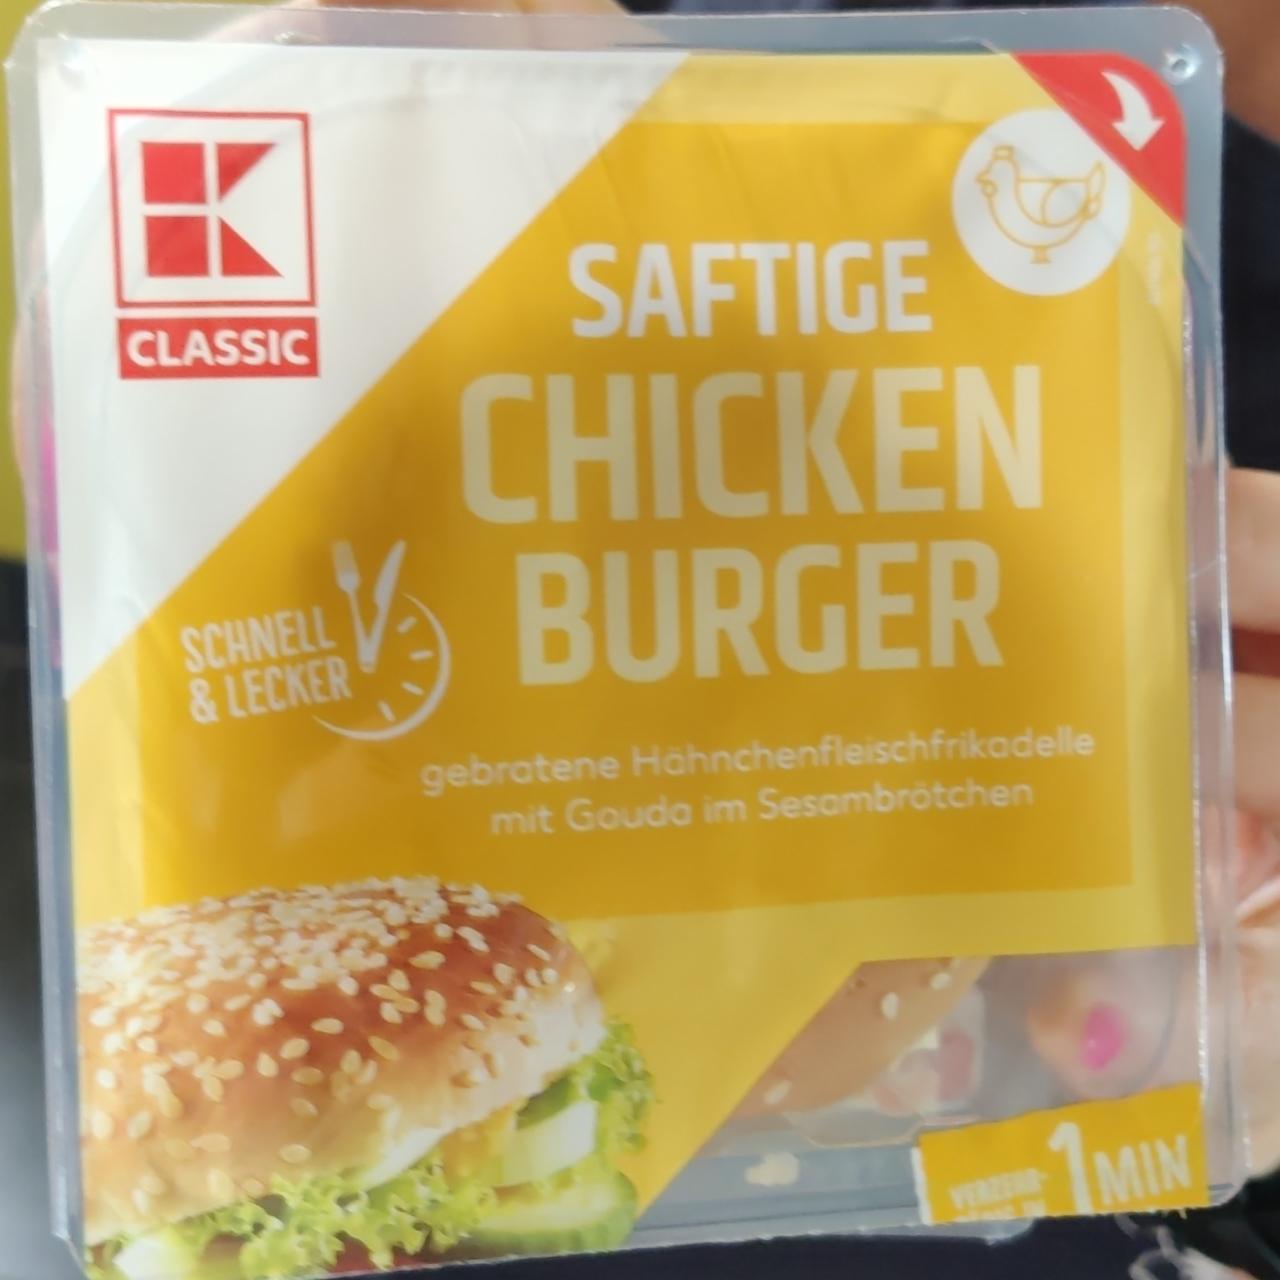 Фото - Бургер классический с курицей Chicken Burger K-Classic